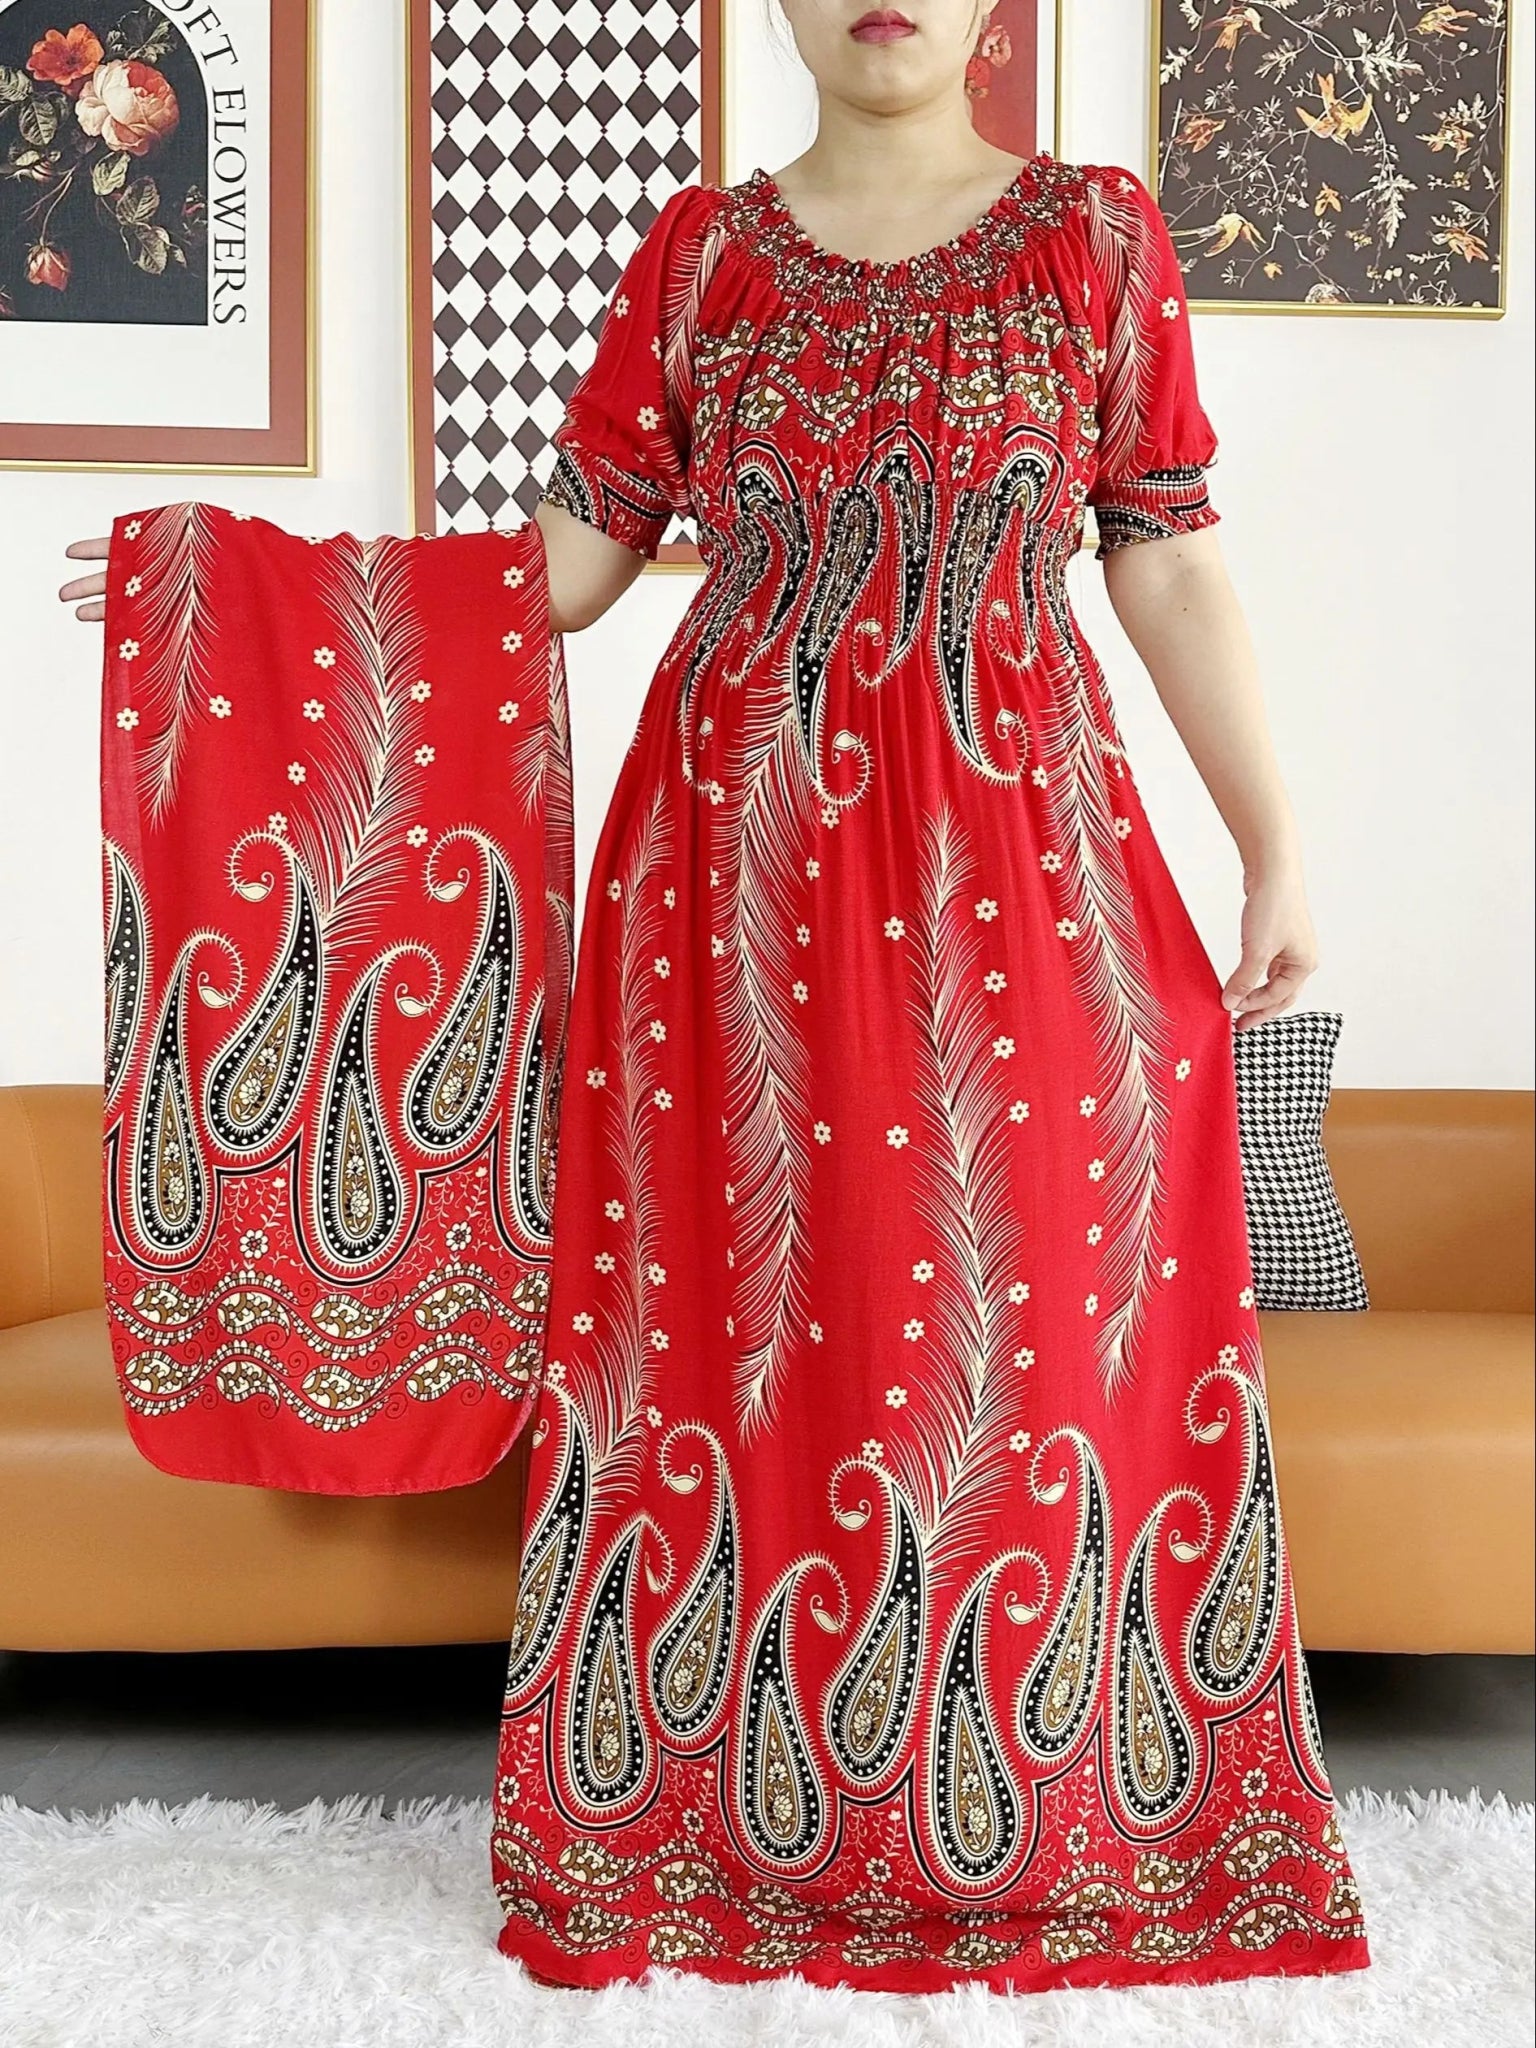 Floral Elegance: Dashiki Inspired Short Sleeve Dress for African Women - 100% Cotton - Flexi Africa - www.flexiafrica.com